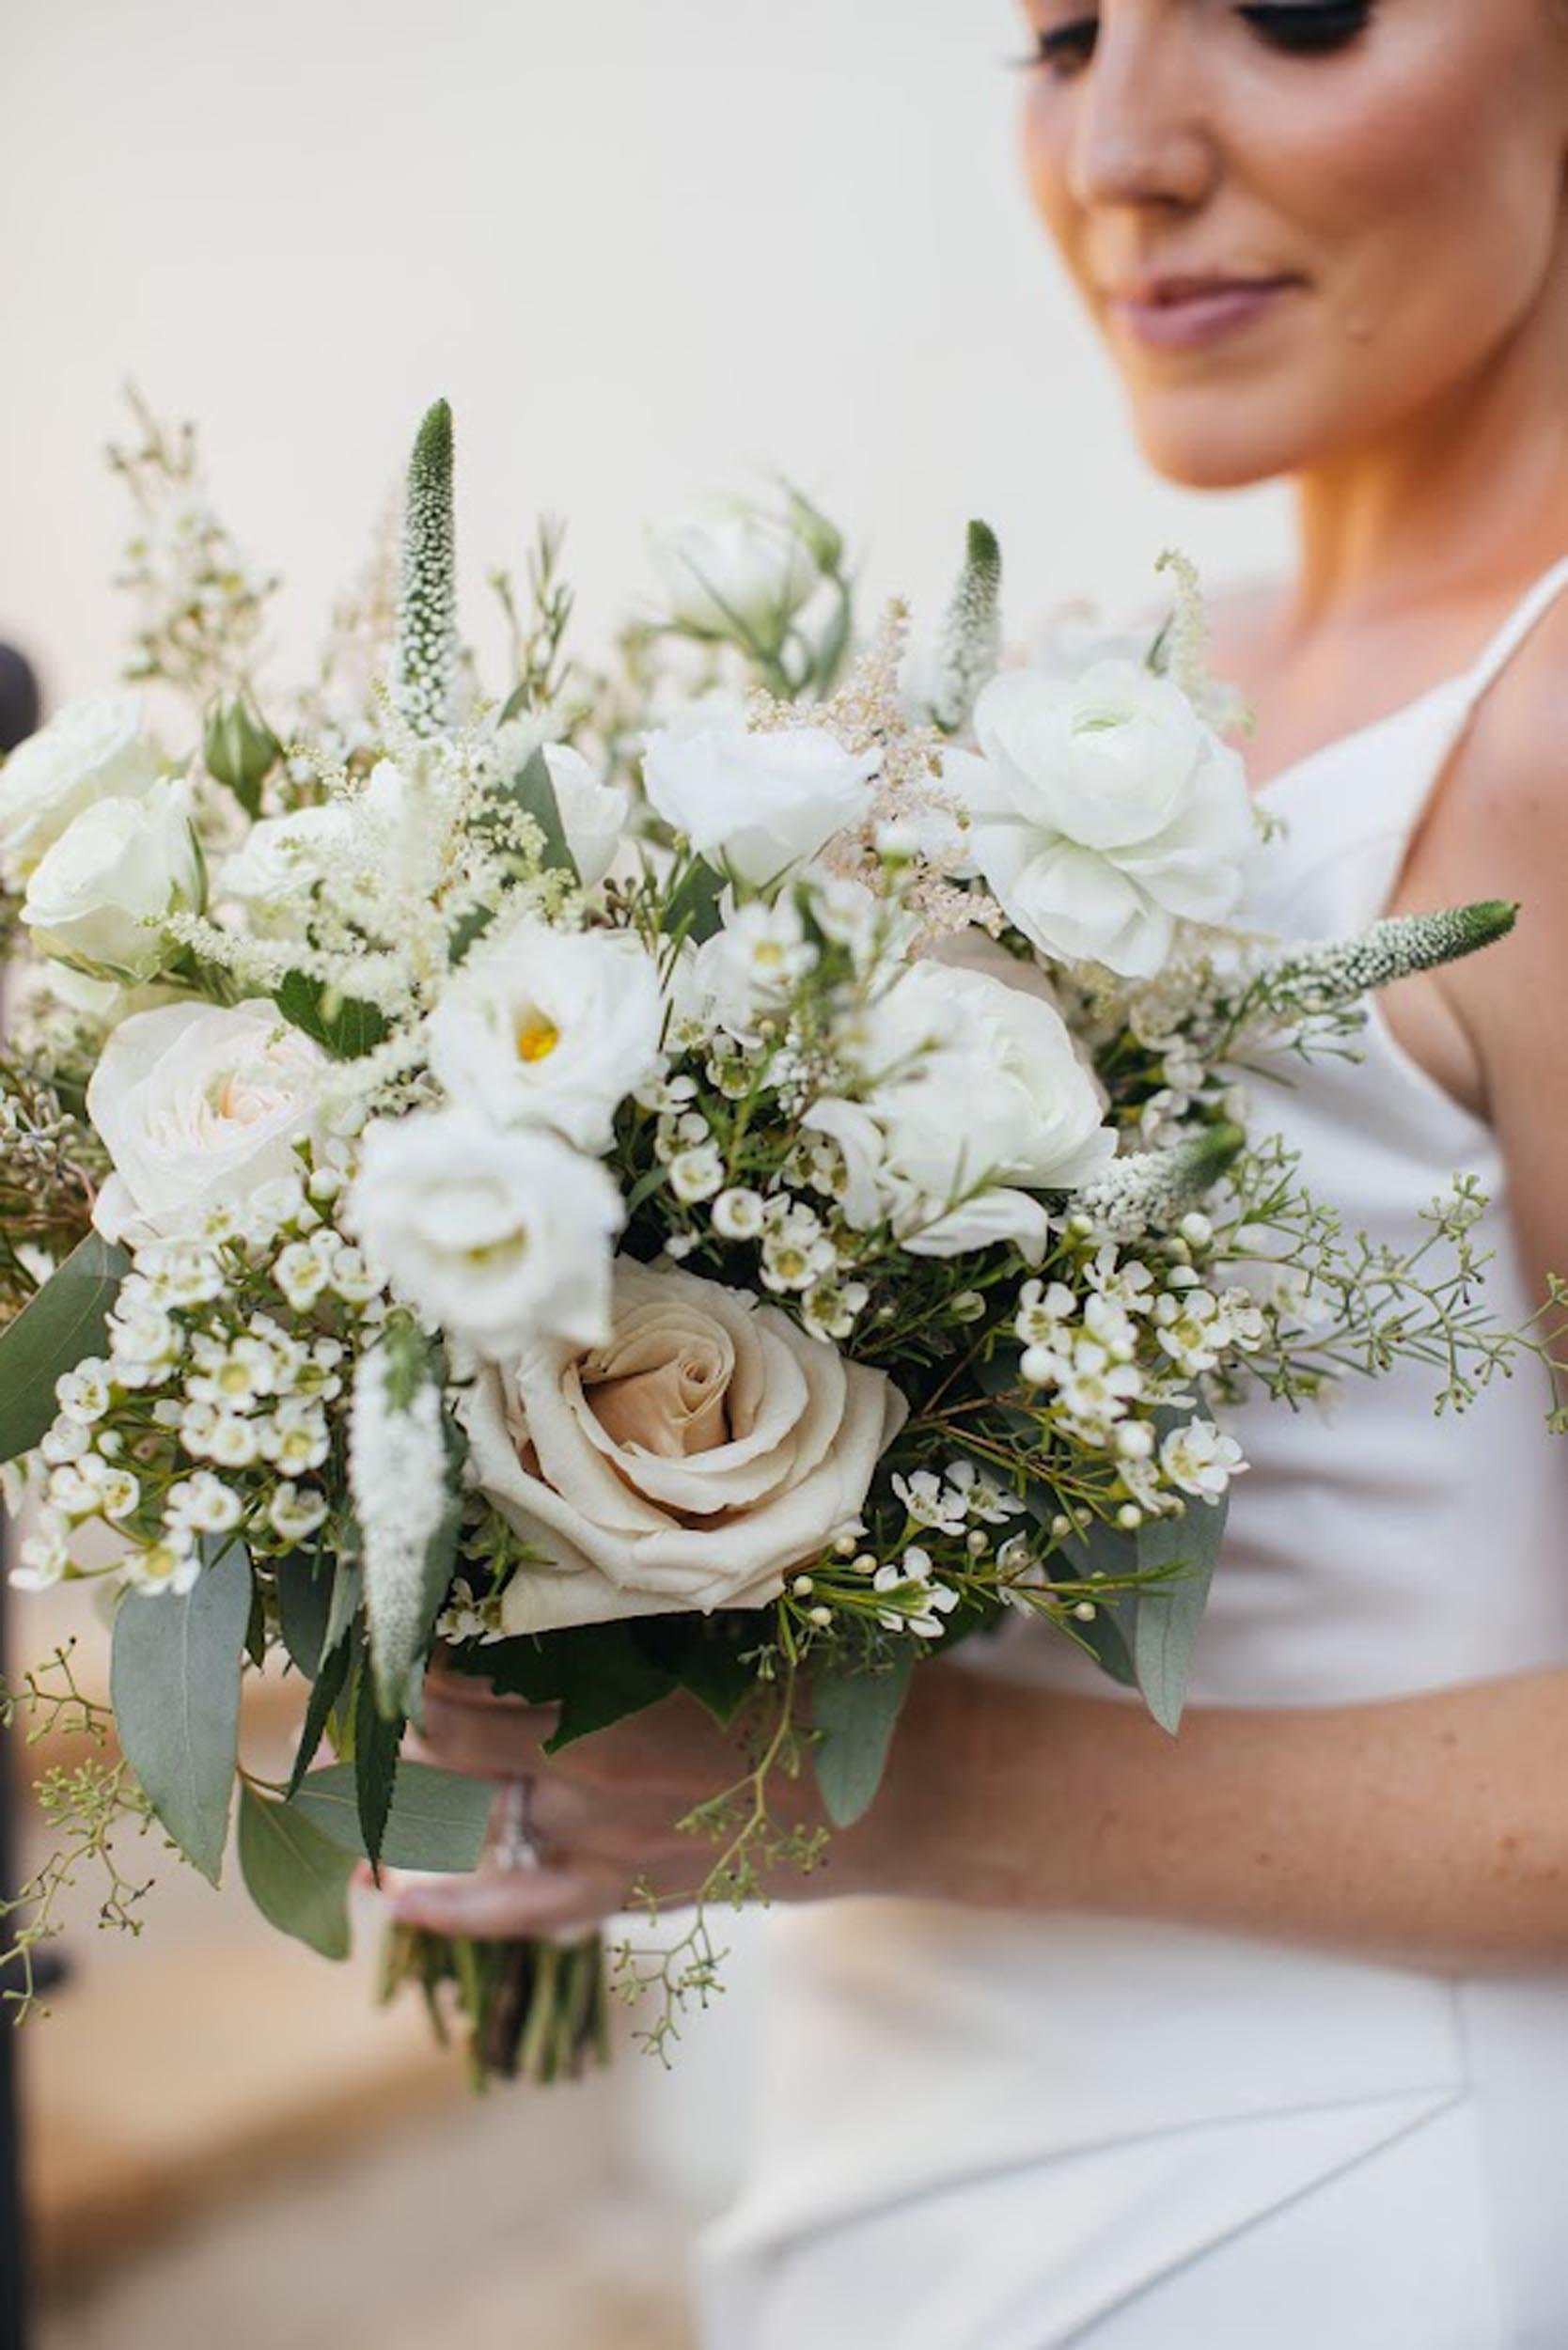 hengstenbergs-florist-weddings-love-story-marisa-nick-©BorisZaretskyPhotography-002.jpg